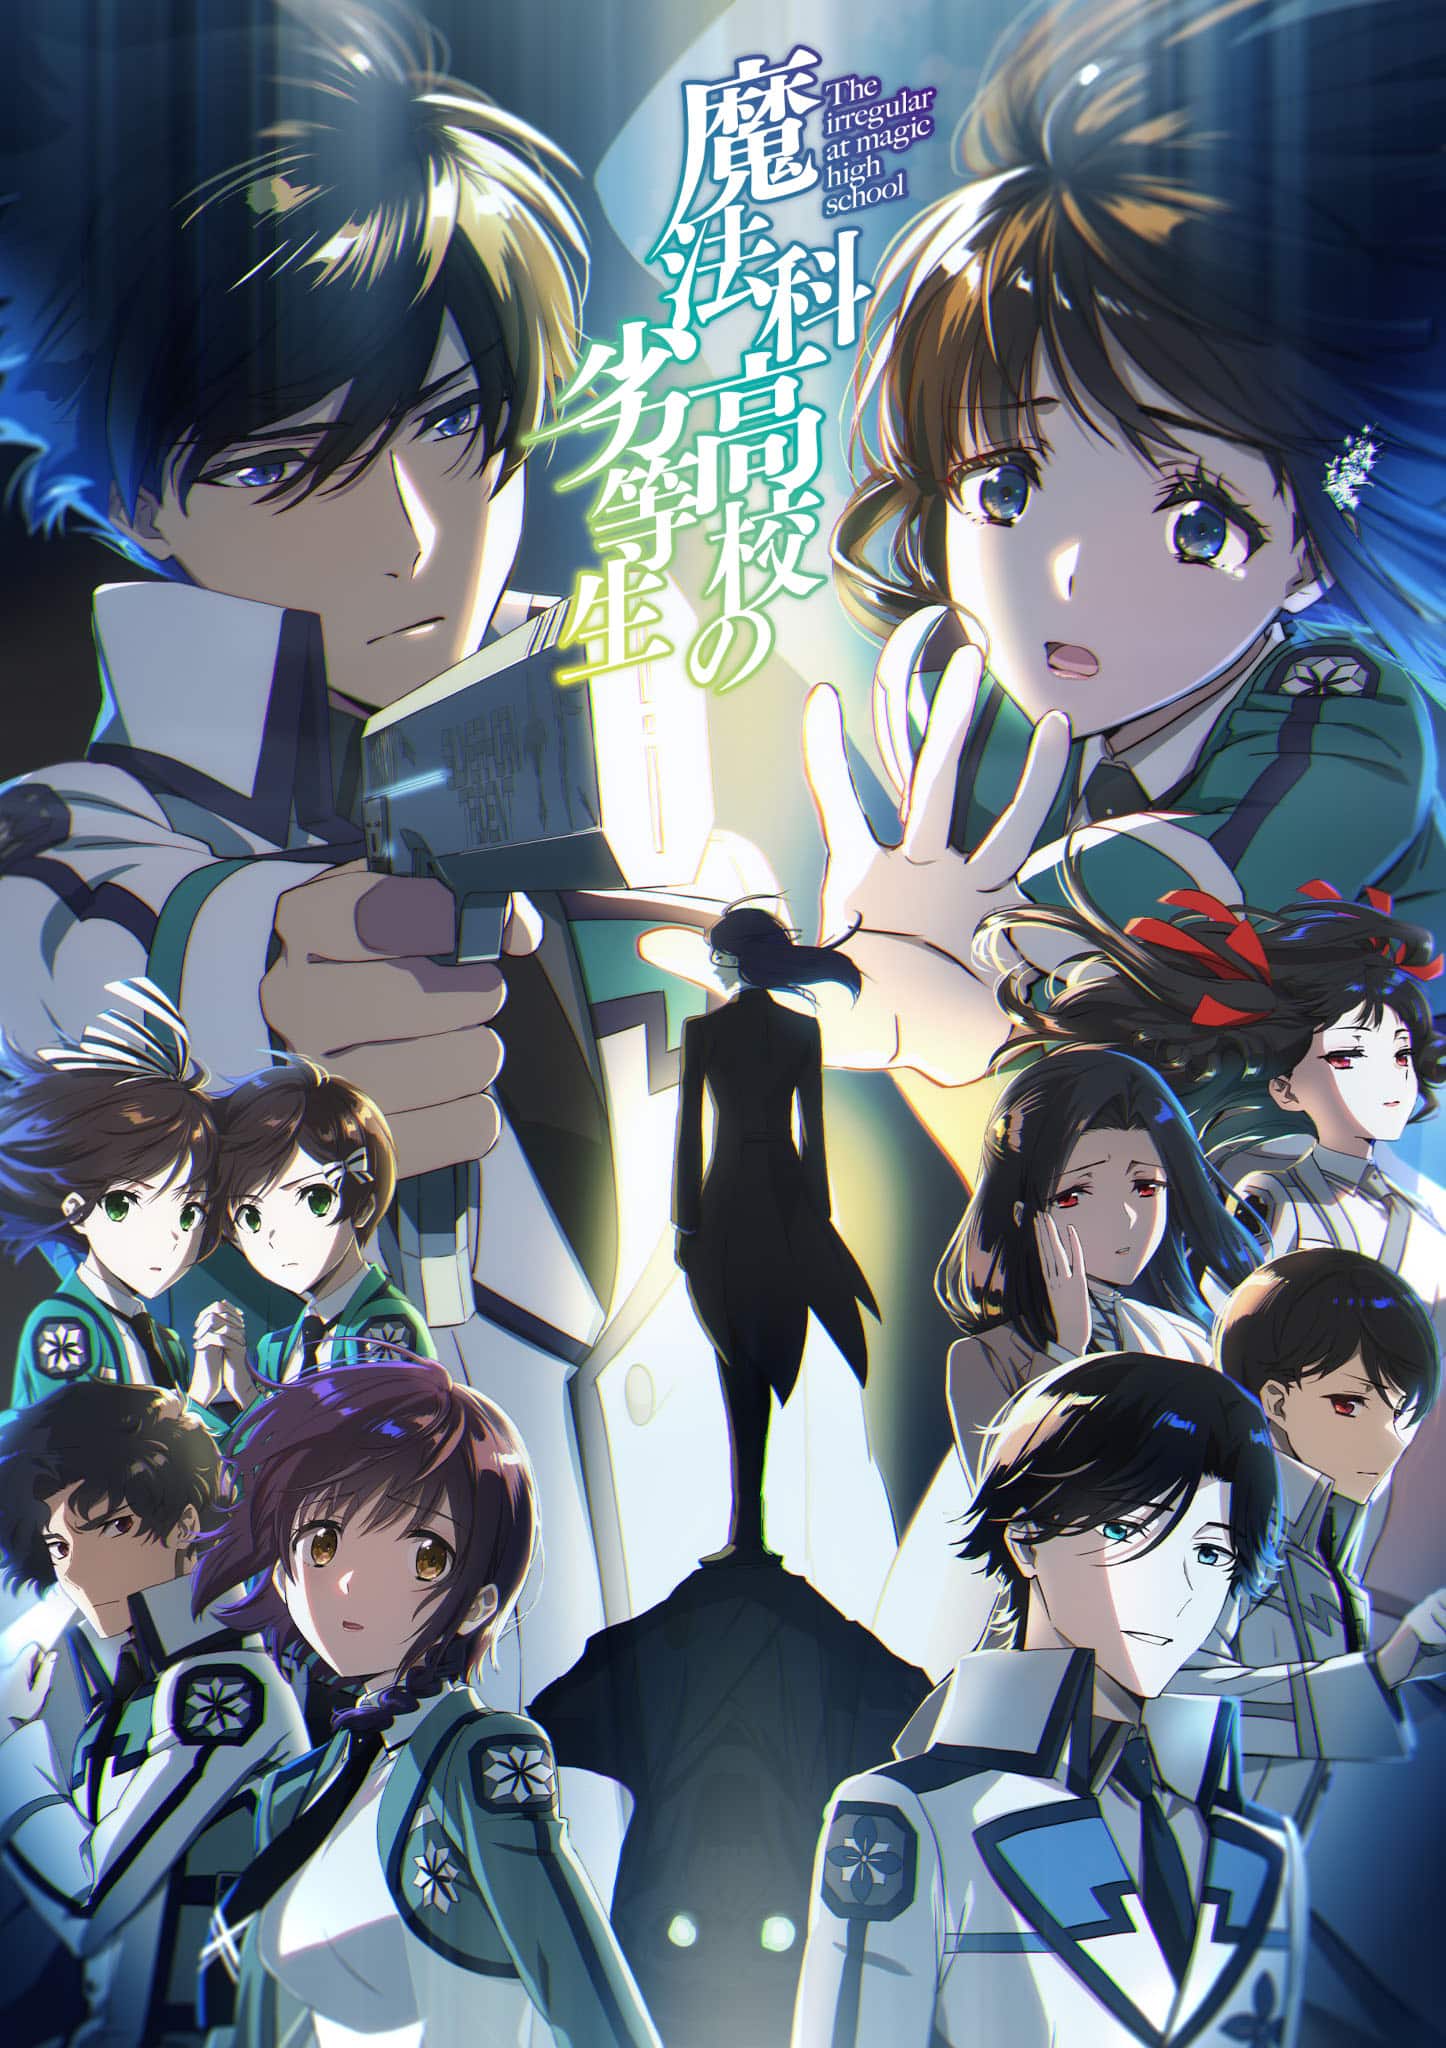 Second visuel pour l'anime The Irregular at Magic High School (Mahouka Koukou no Rettousei : Kakugo) Saison 3